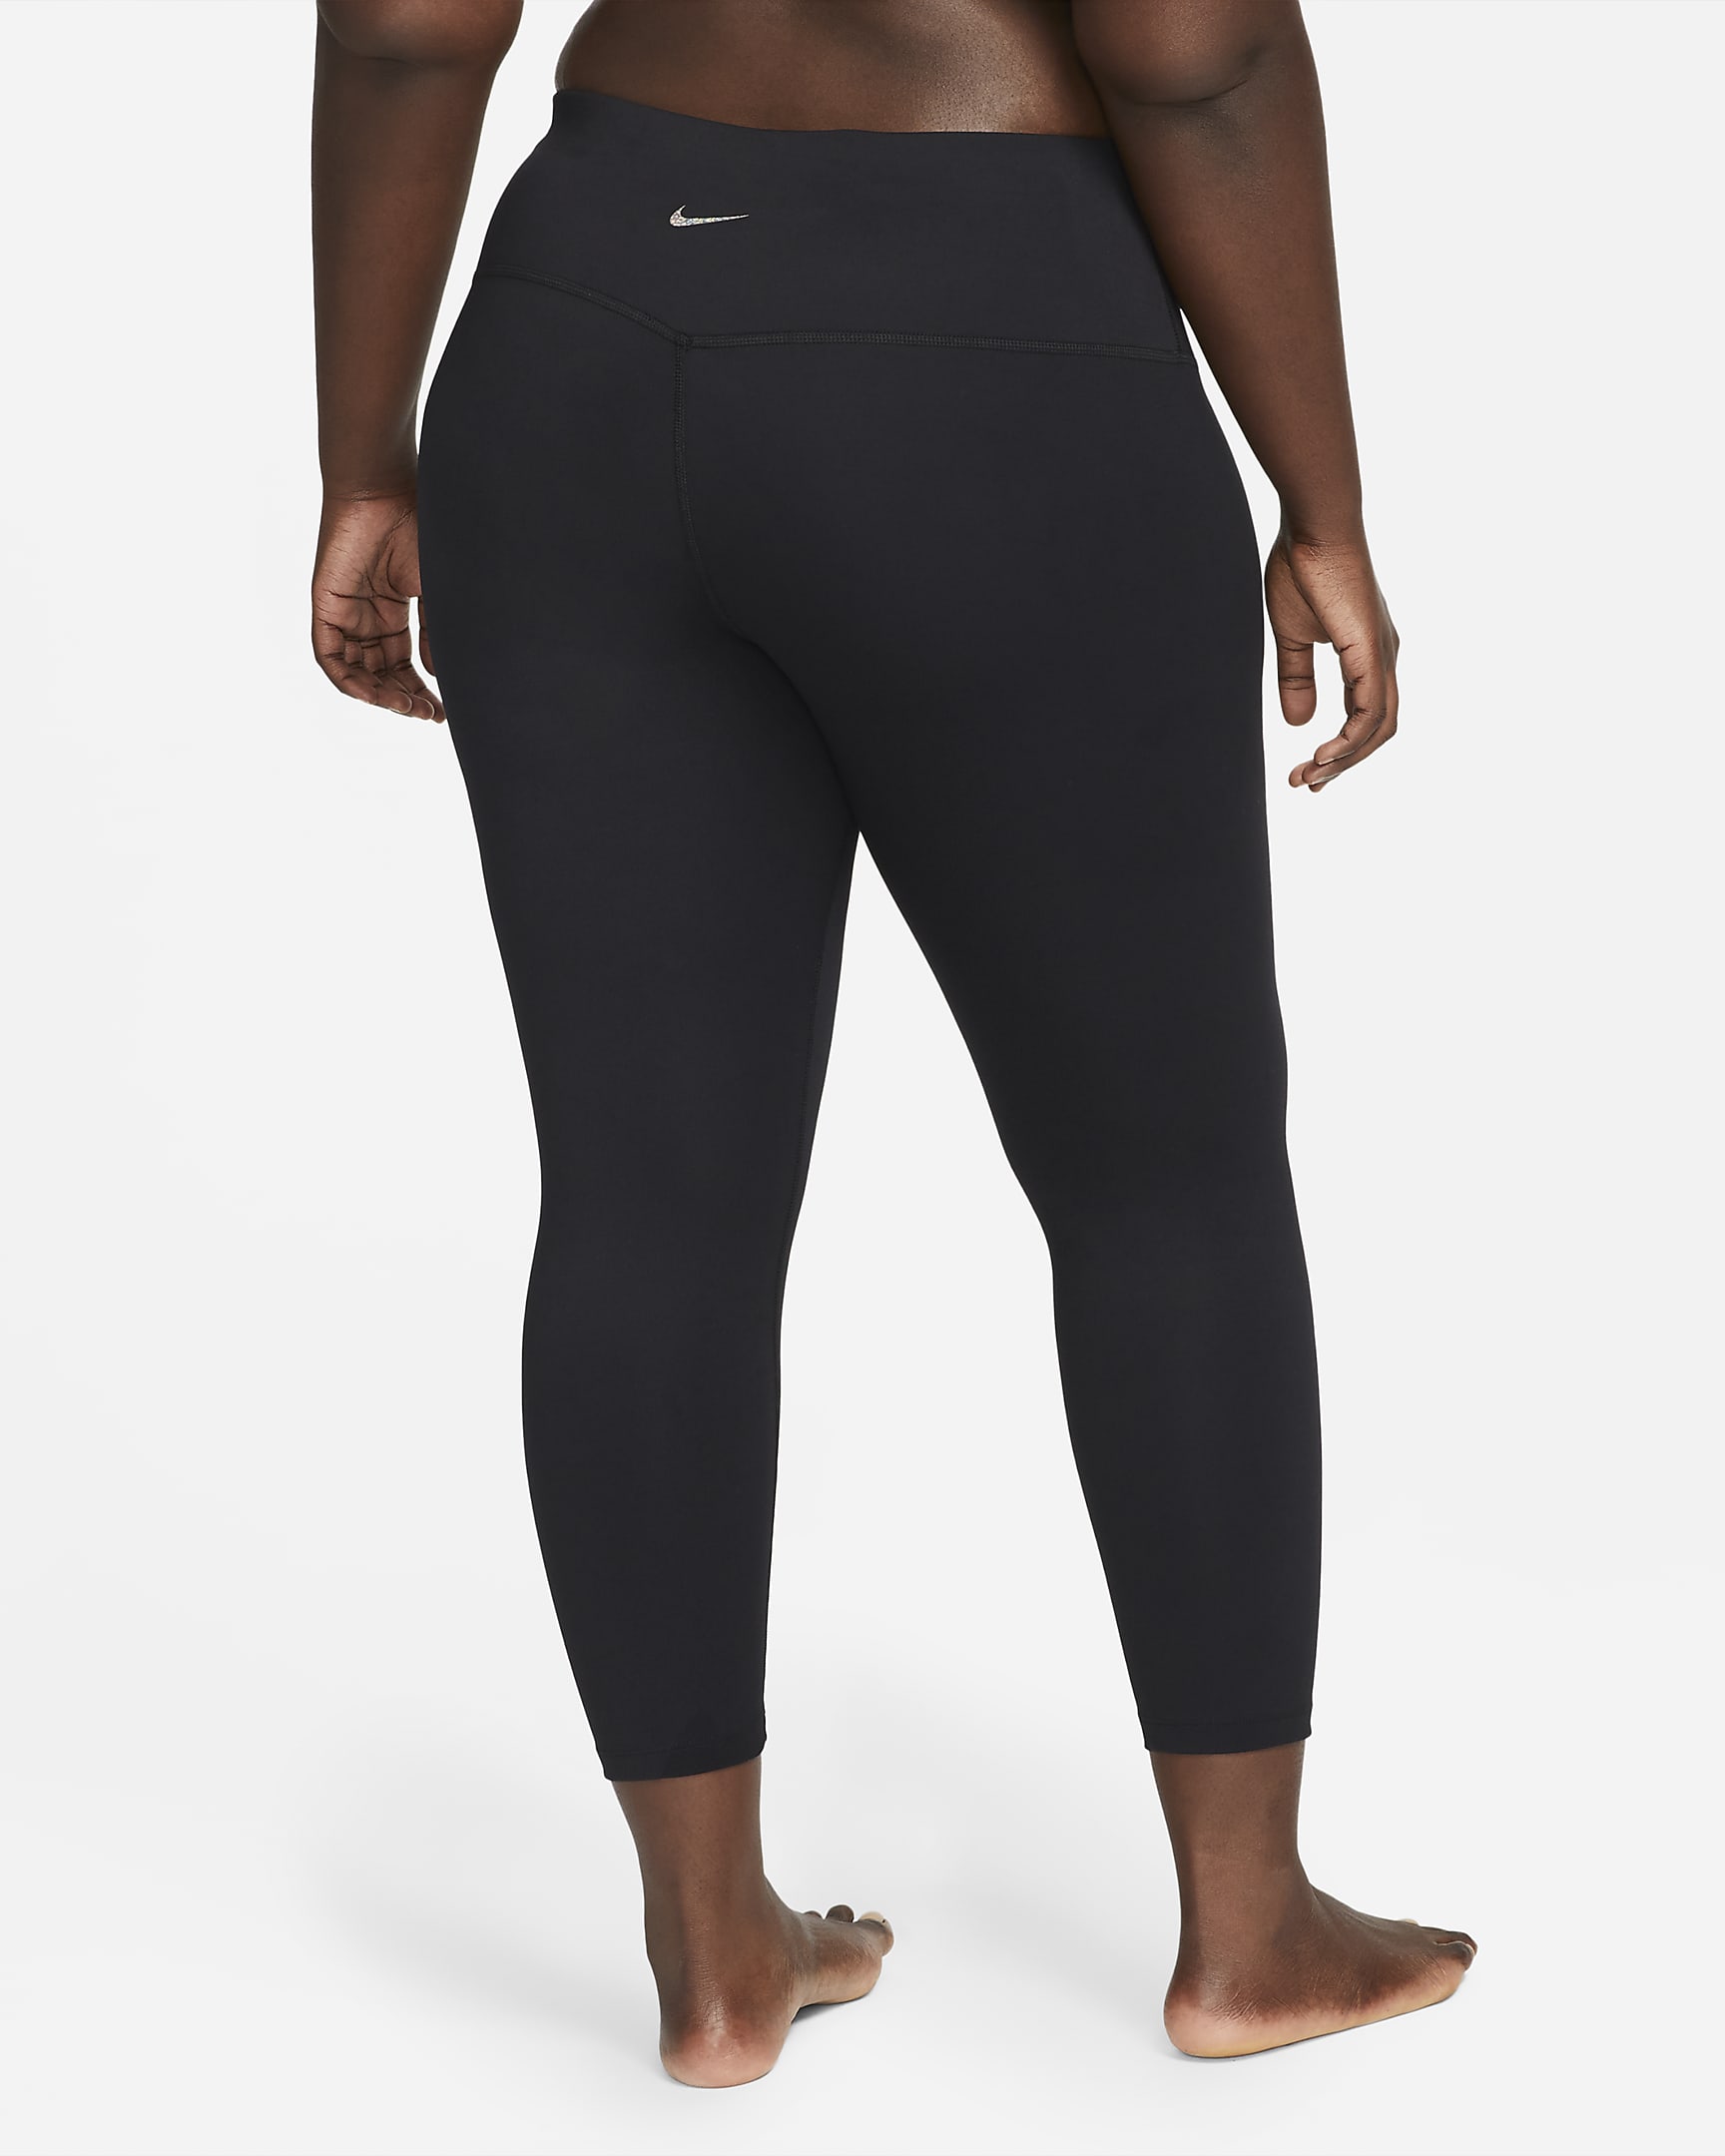 Nike Yoga Women's High-Waisted 7/8 Leggings (Plus Size). Nike HR